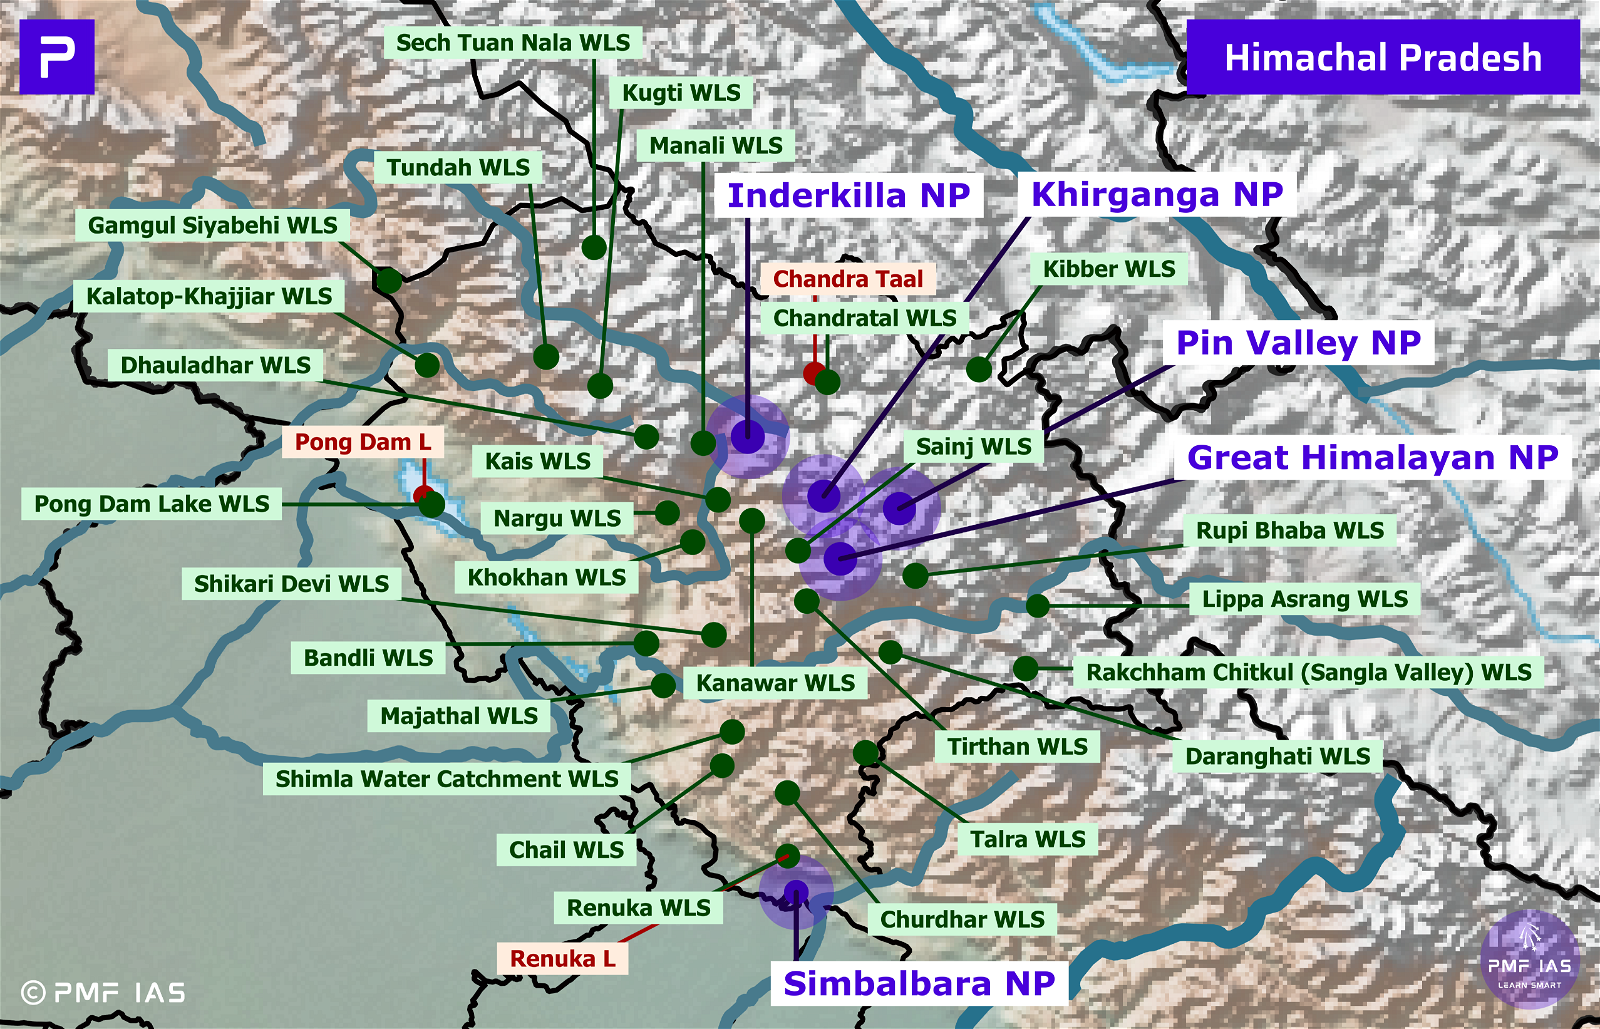 National Parks Tiger Reserves Wildlife Sanctuaries of Himachal Pradesh